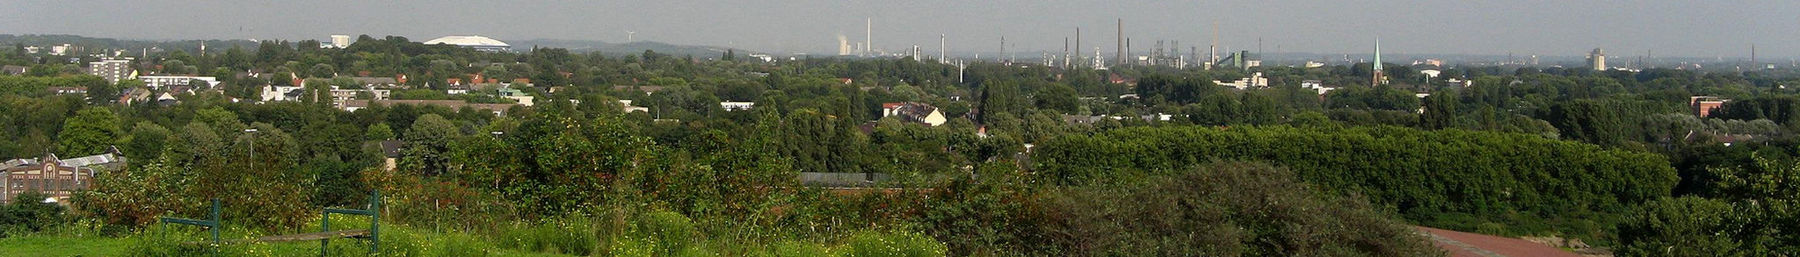 Ruhrgebiet panorama 2100 30.jpg